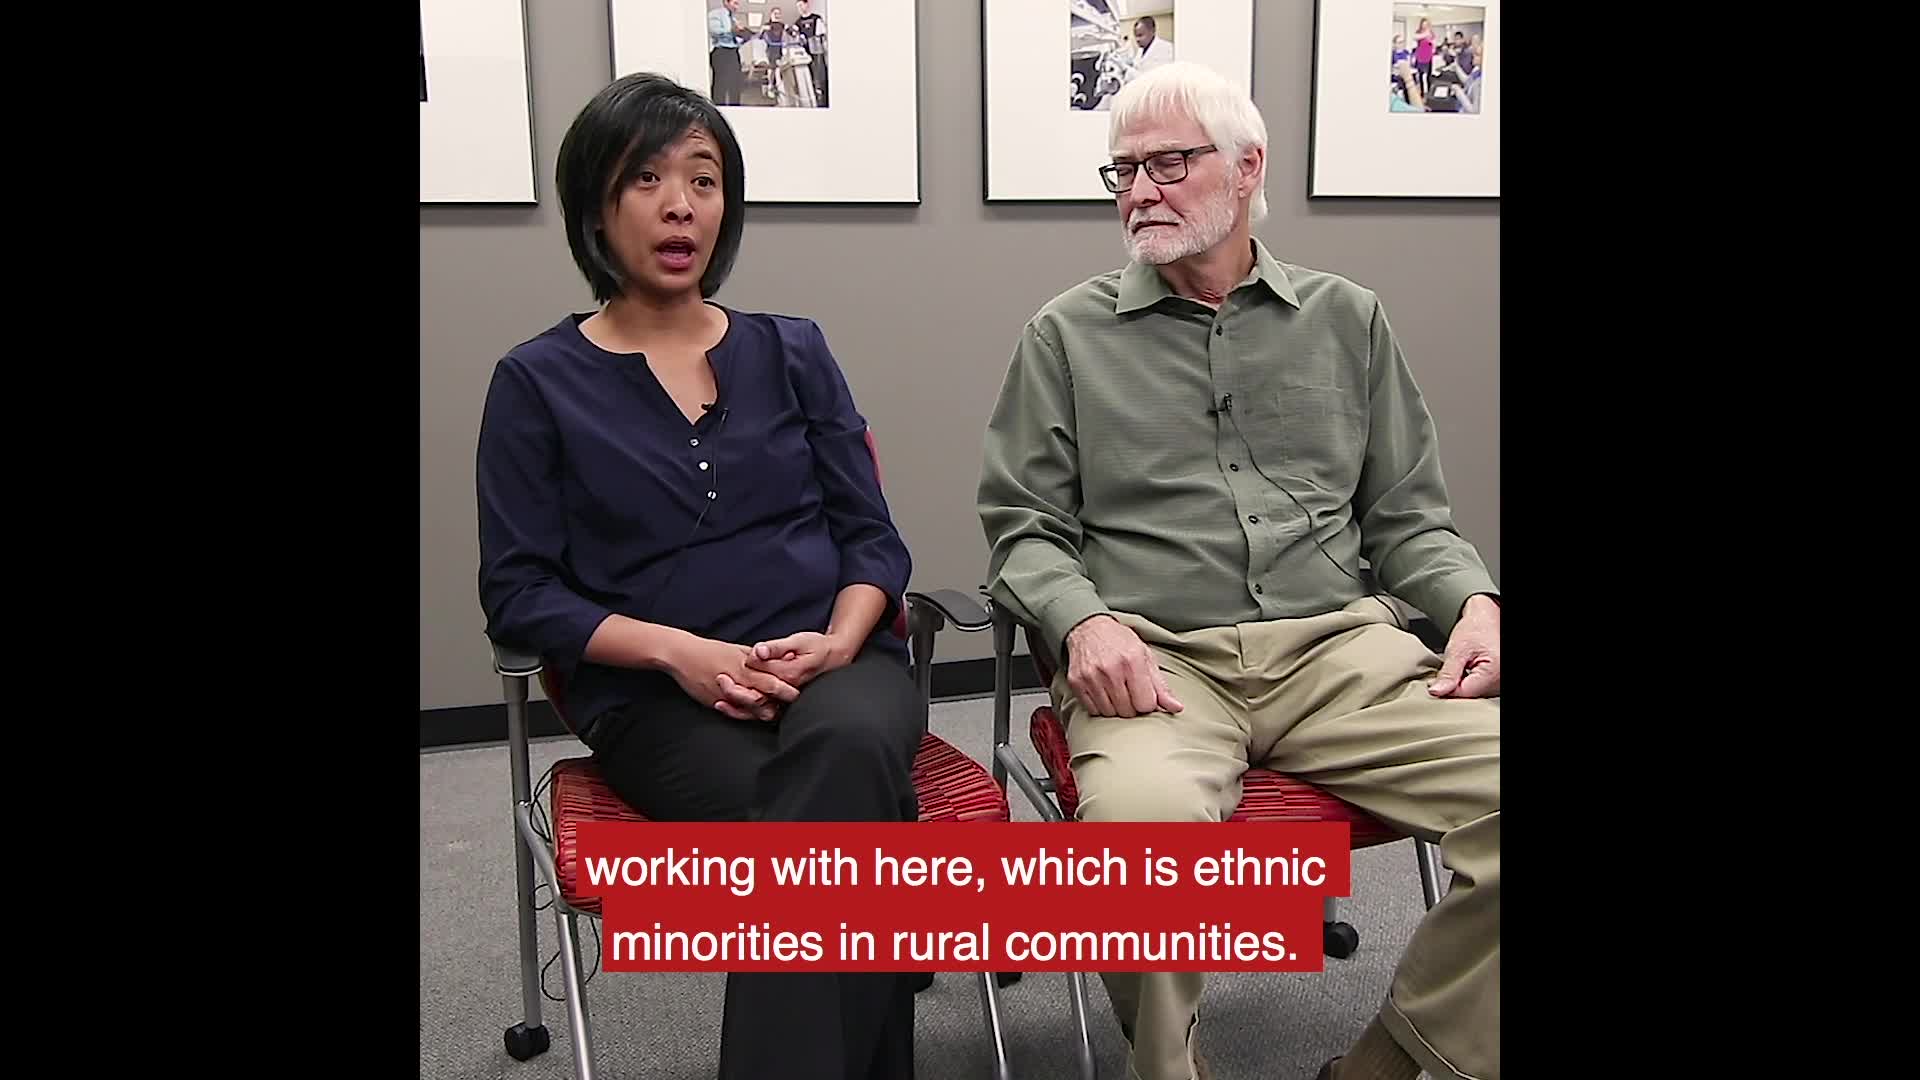 Study aims to enhance quality of life for rural Nebraska minorities, communities